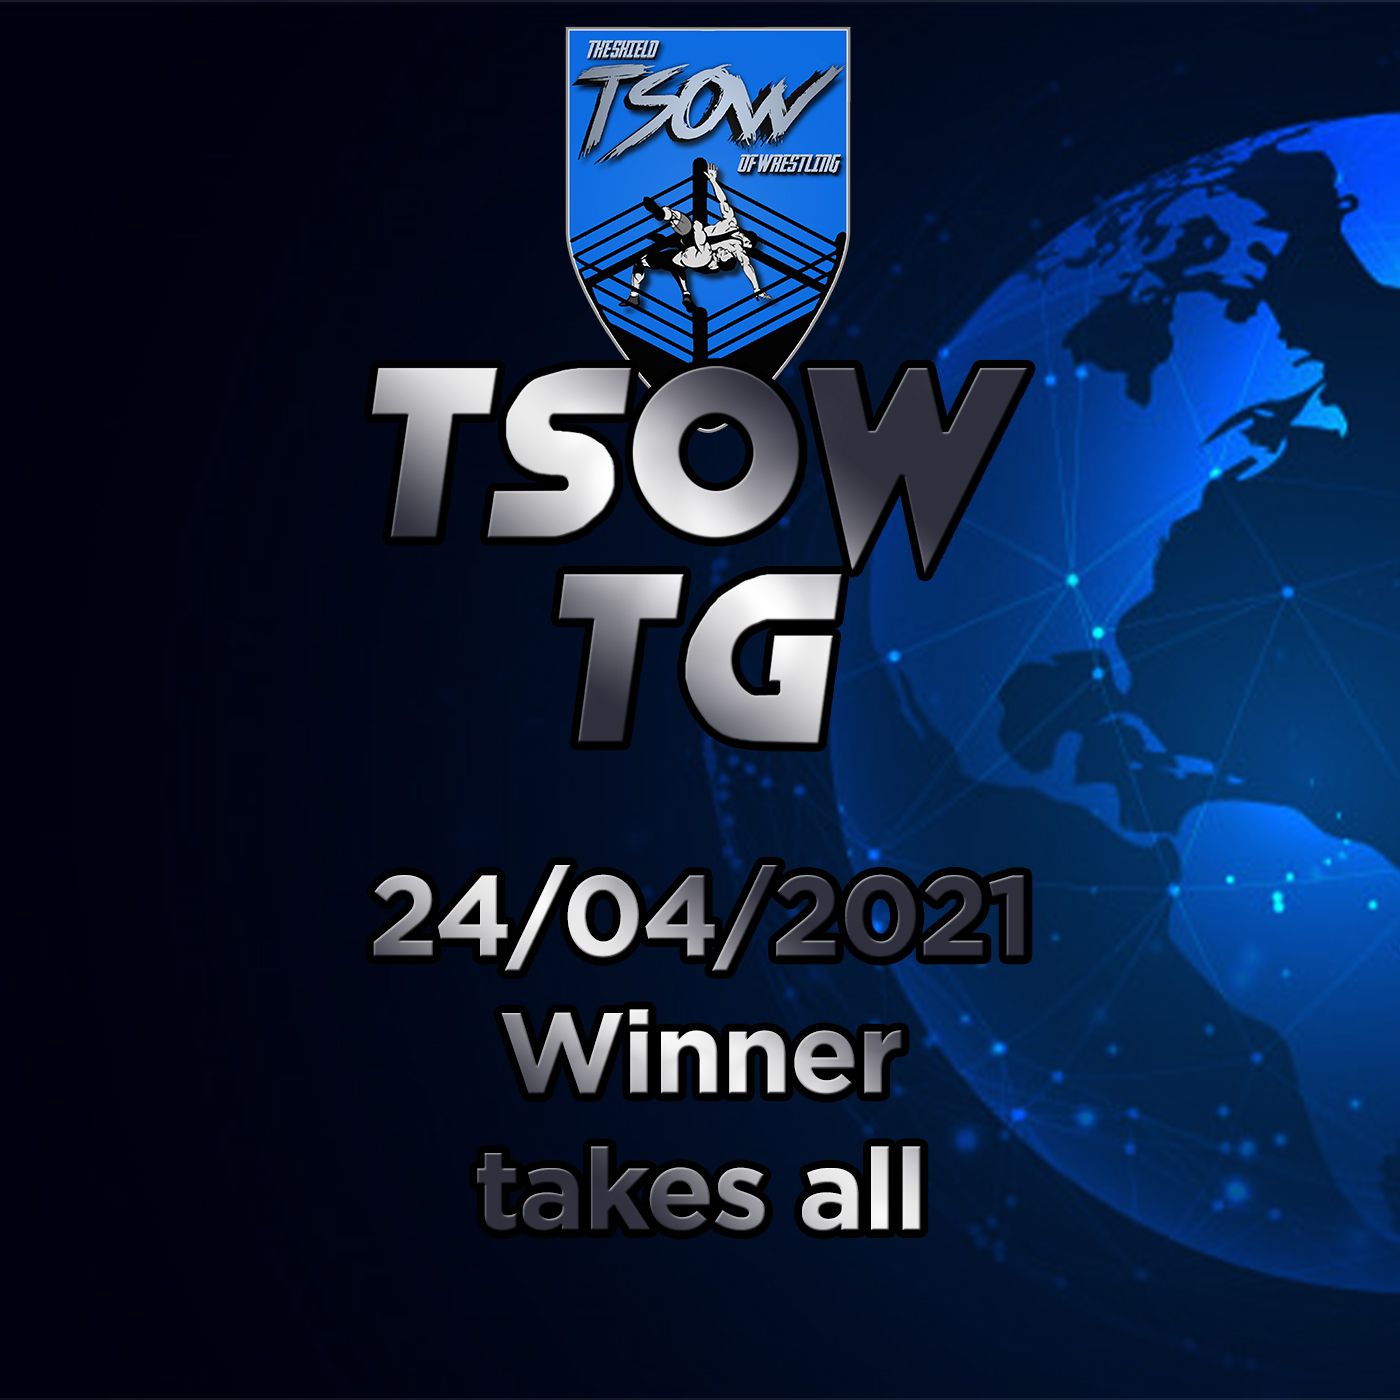 TSOW TG/24/04/21 - Winner takes all